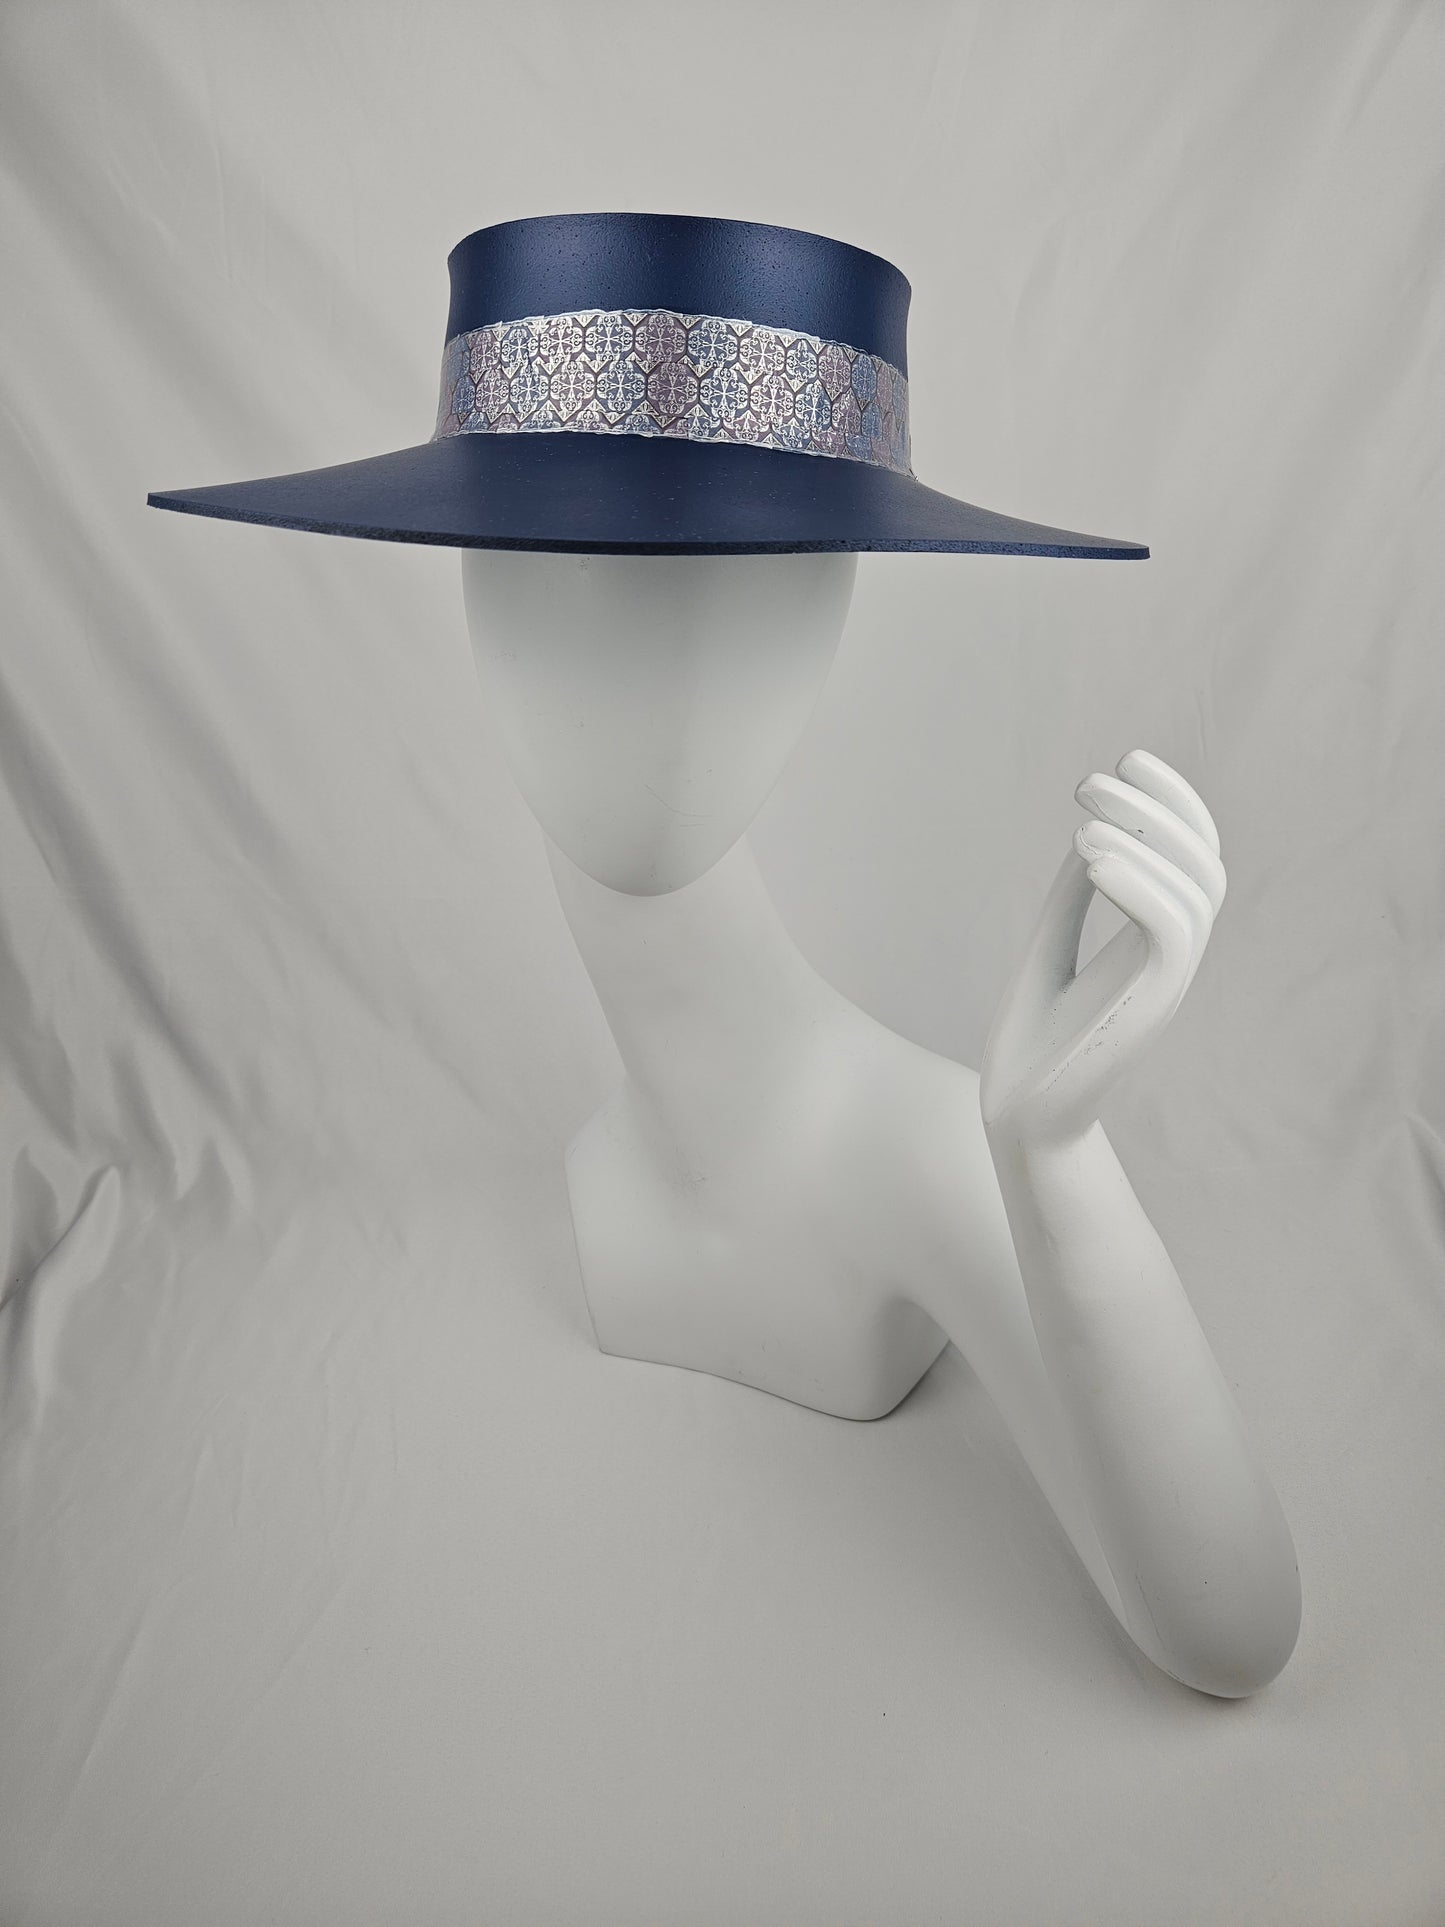 Classic Navy Audrey Foam Sun Visor Hat with Silver Geometric Band and Handpainted Floral Motif: Big Brim, Golf, Swim, UV Resistant, No Headache